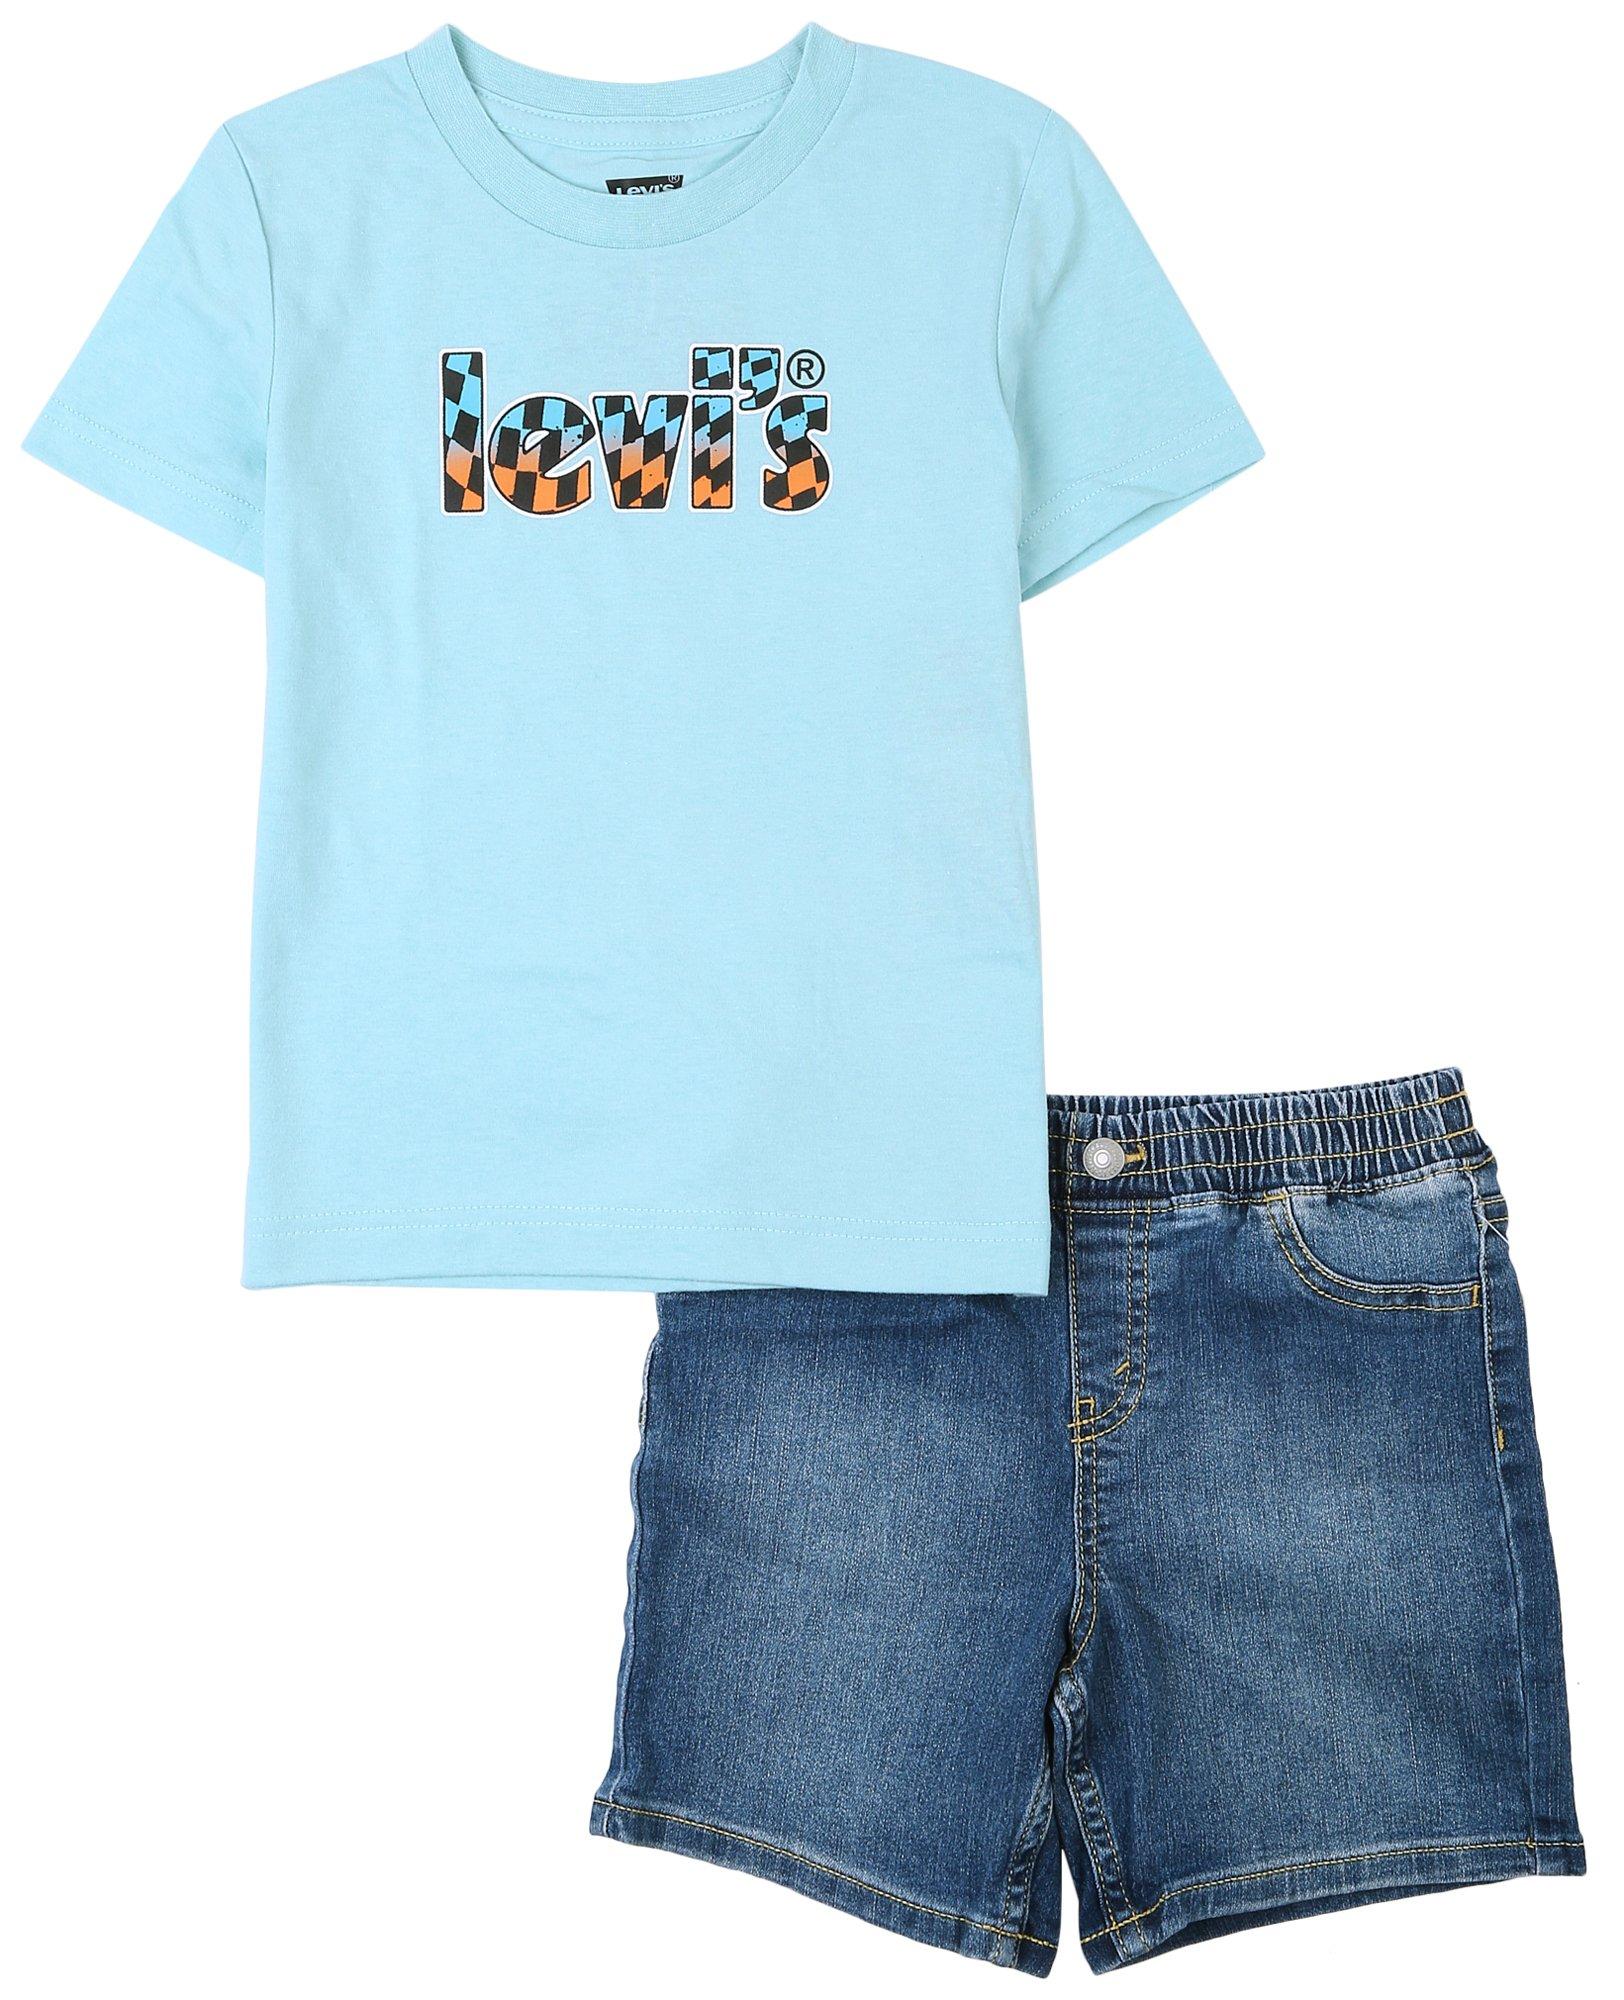 Toddler Boys 2-pc. Levi's Tee & Shorts Set